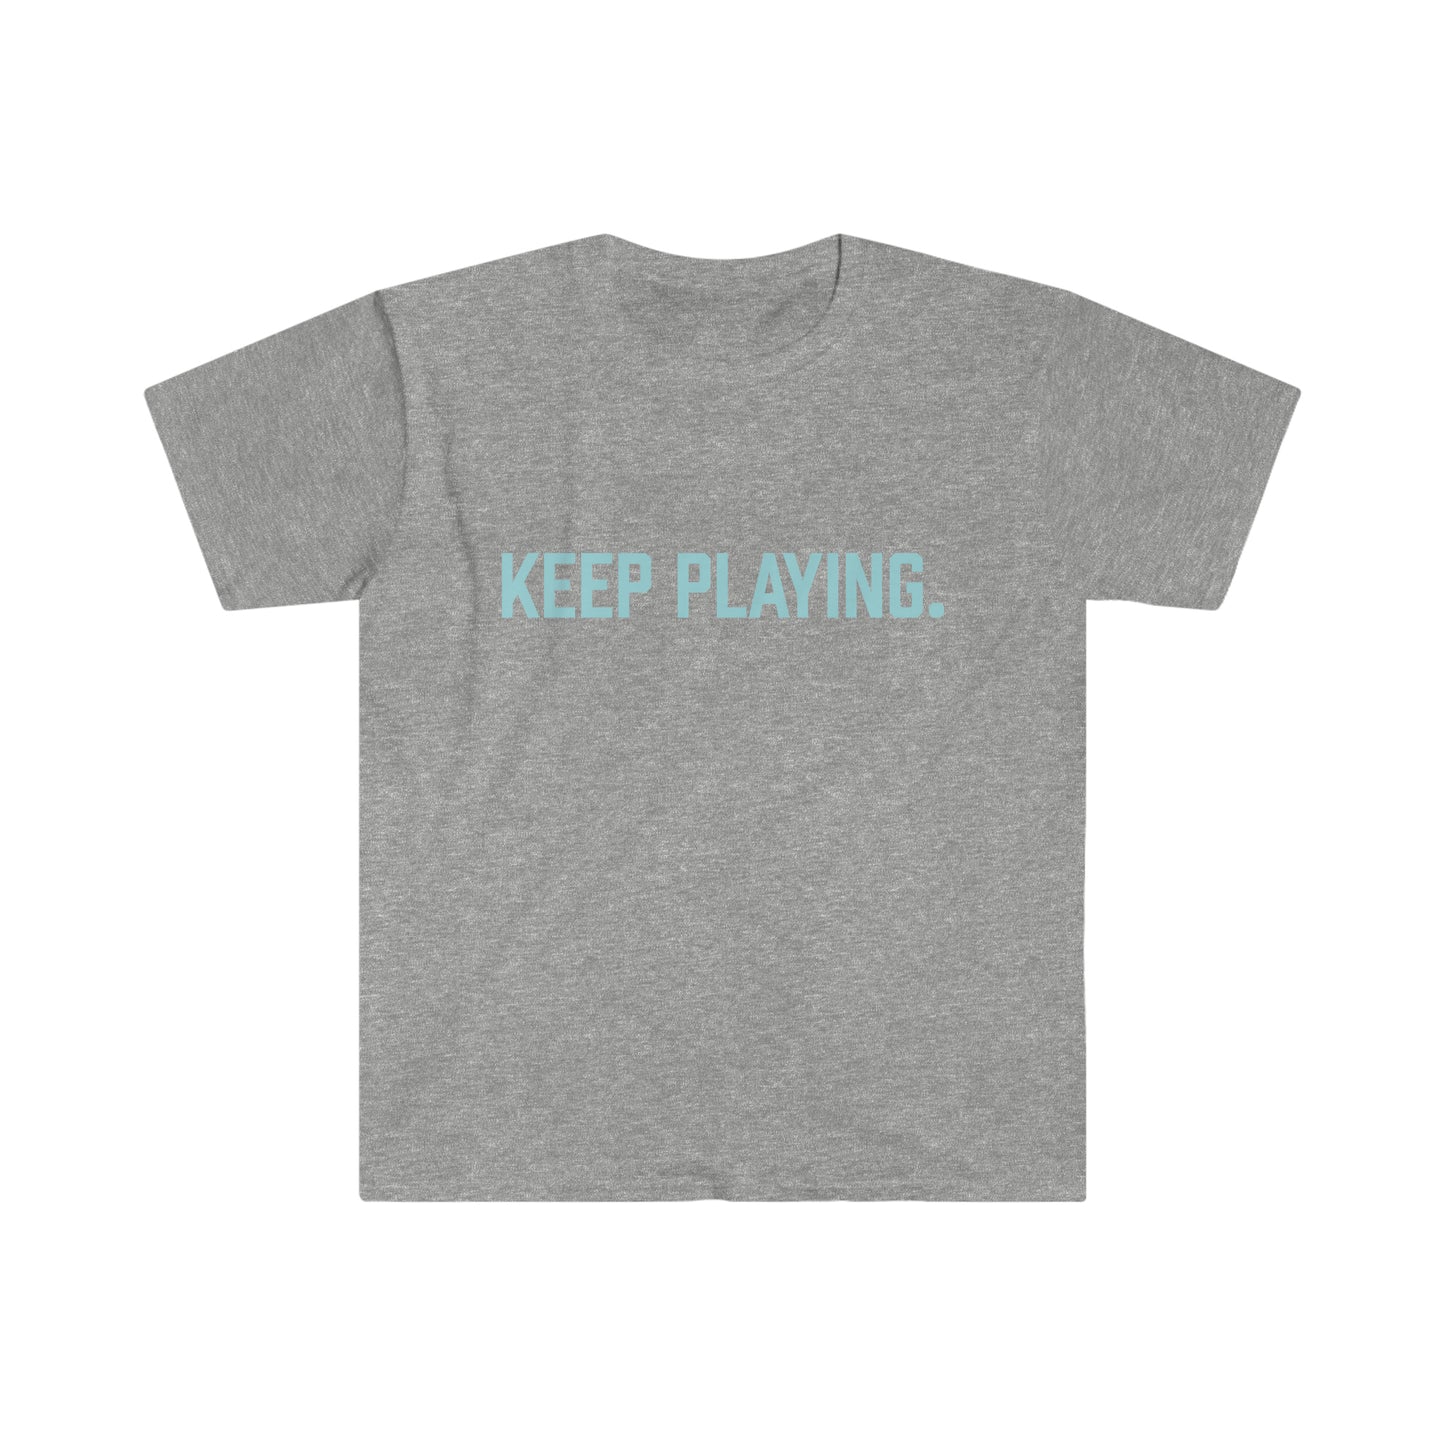 Keep Playing. T-Shirt